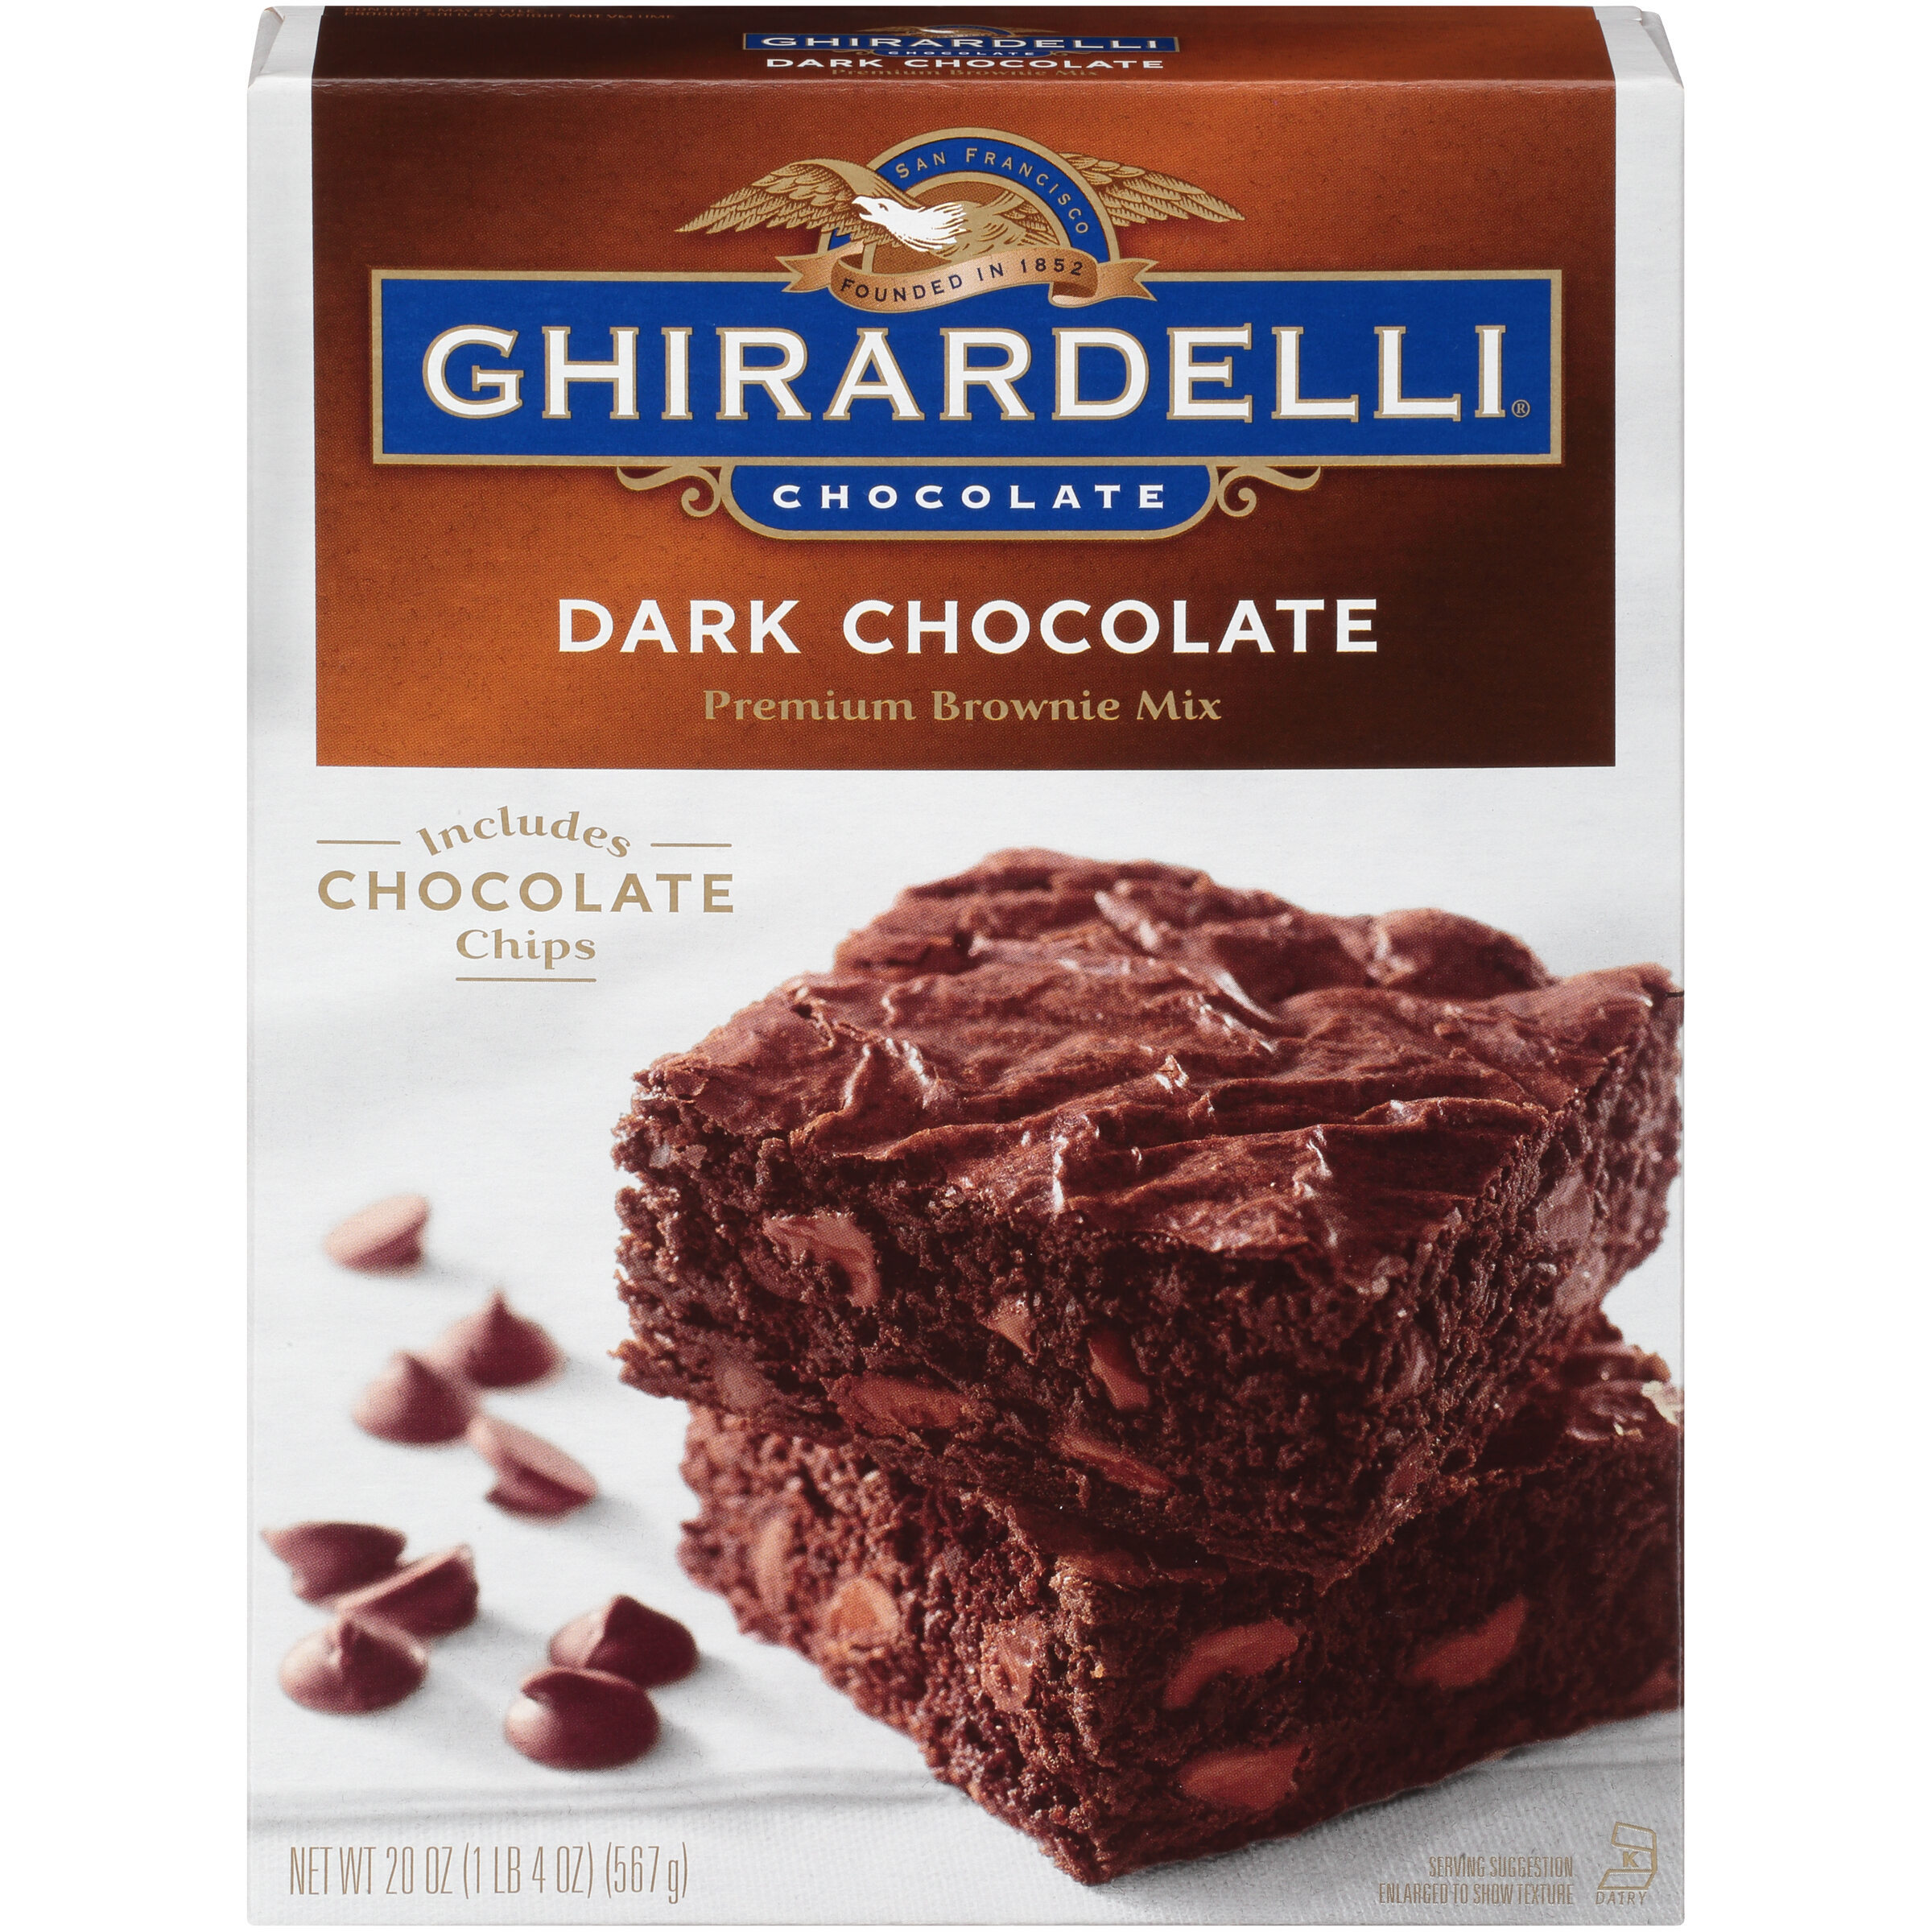 Ghirardelli Dark Chocolate Premium Brownie Mix, Includes Chocolate Chips, 20 oz Box - image 1 of 11